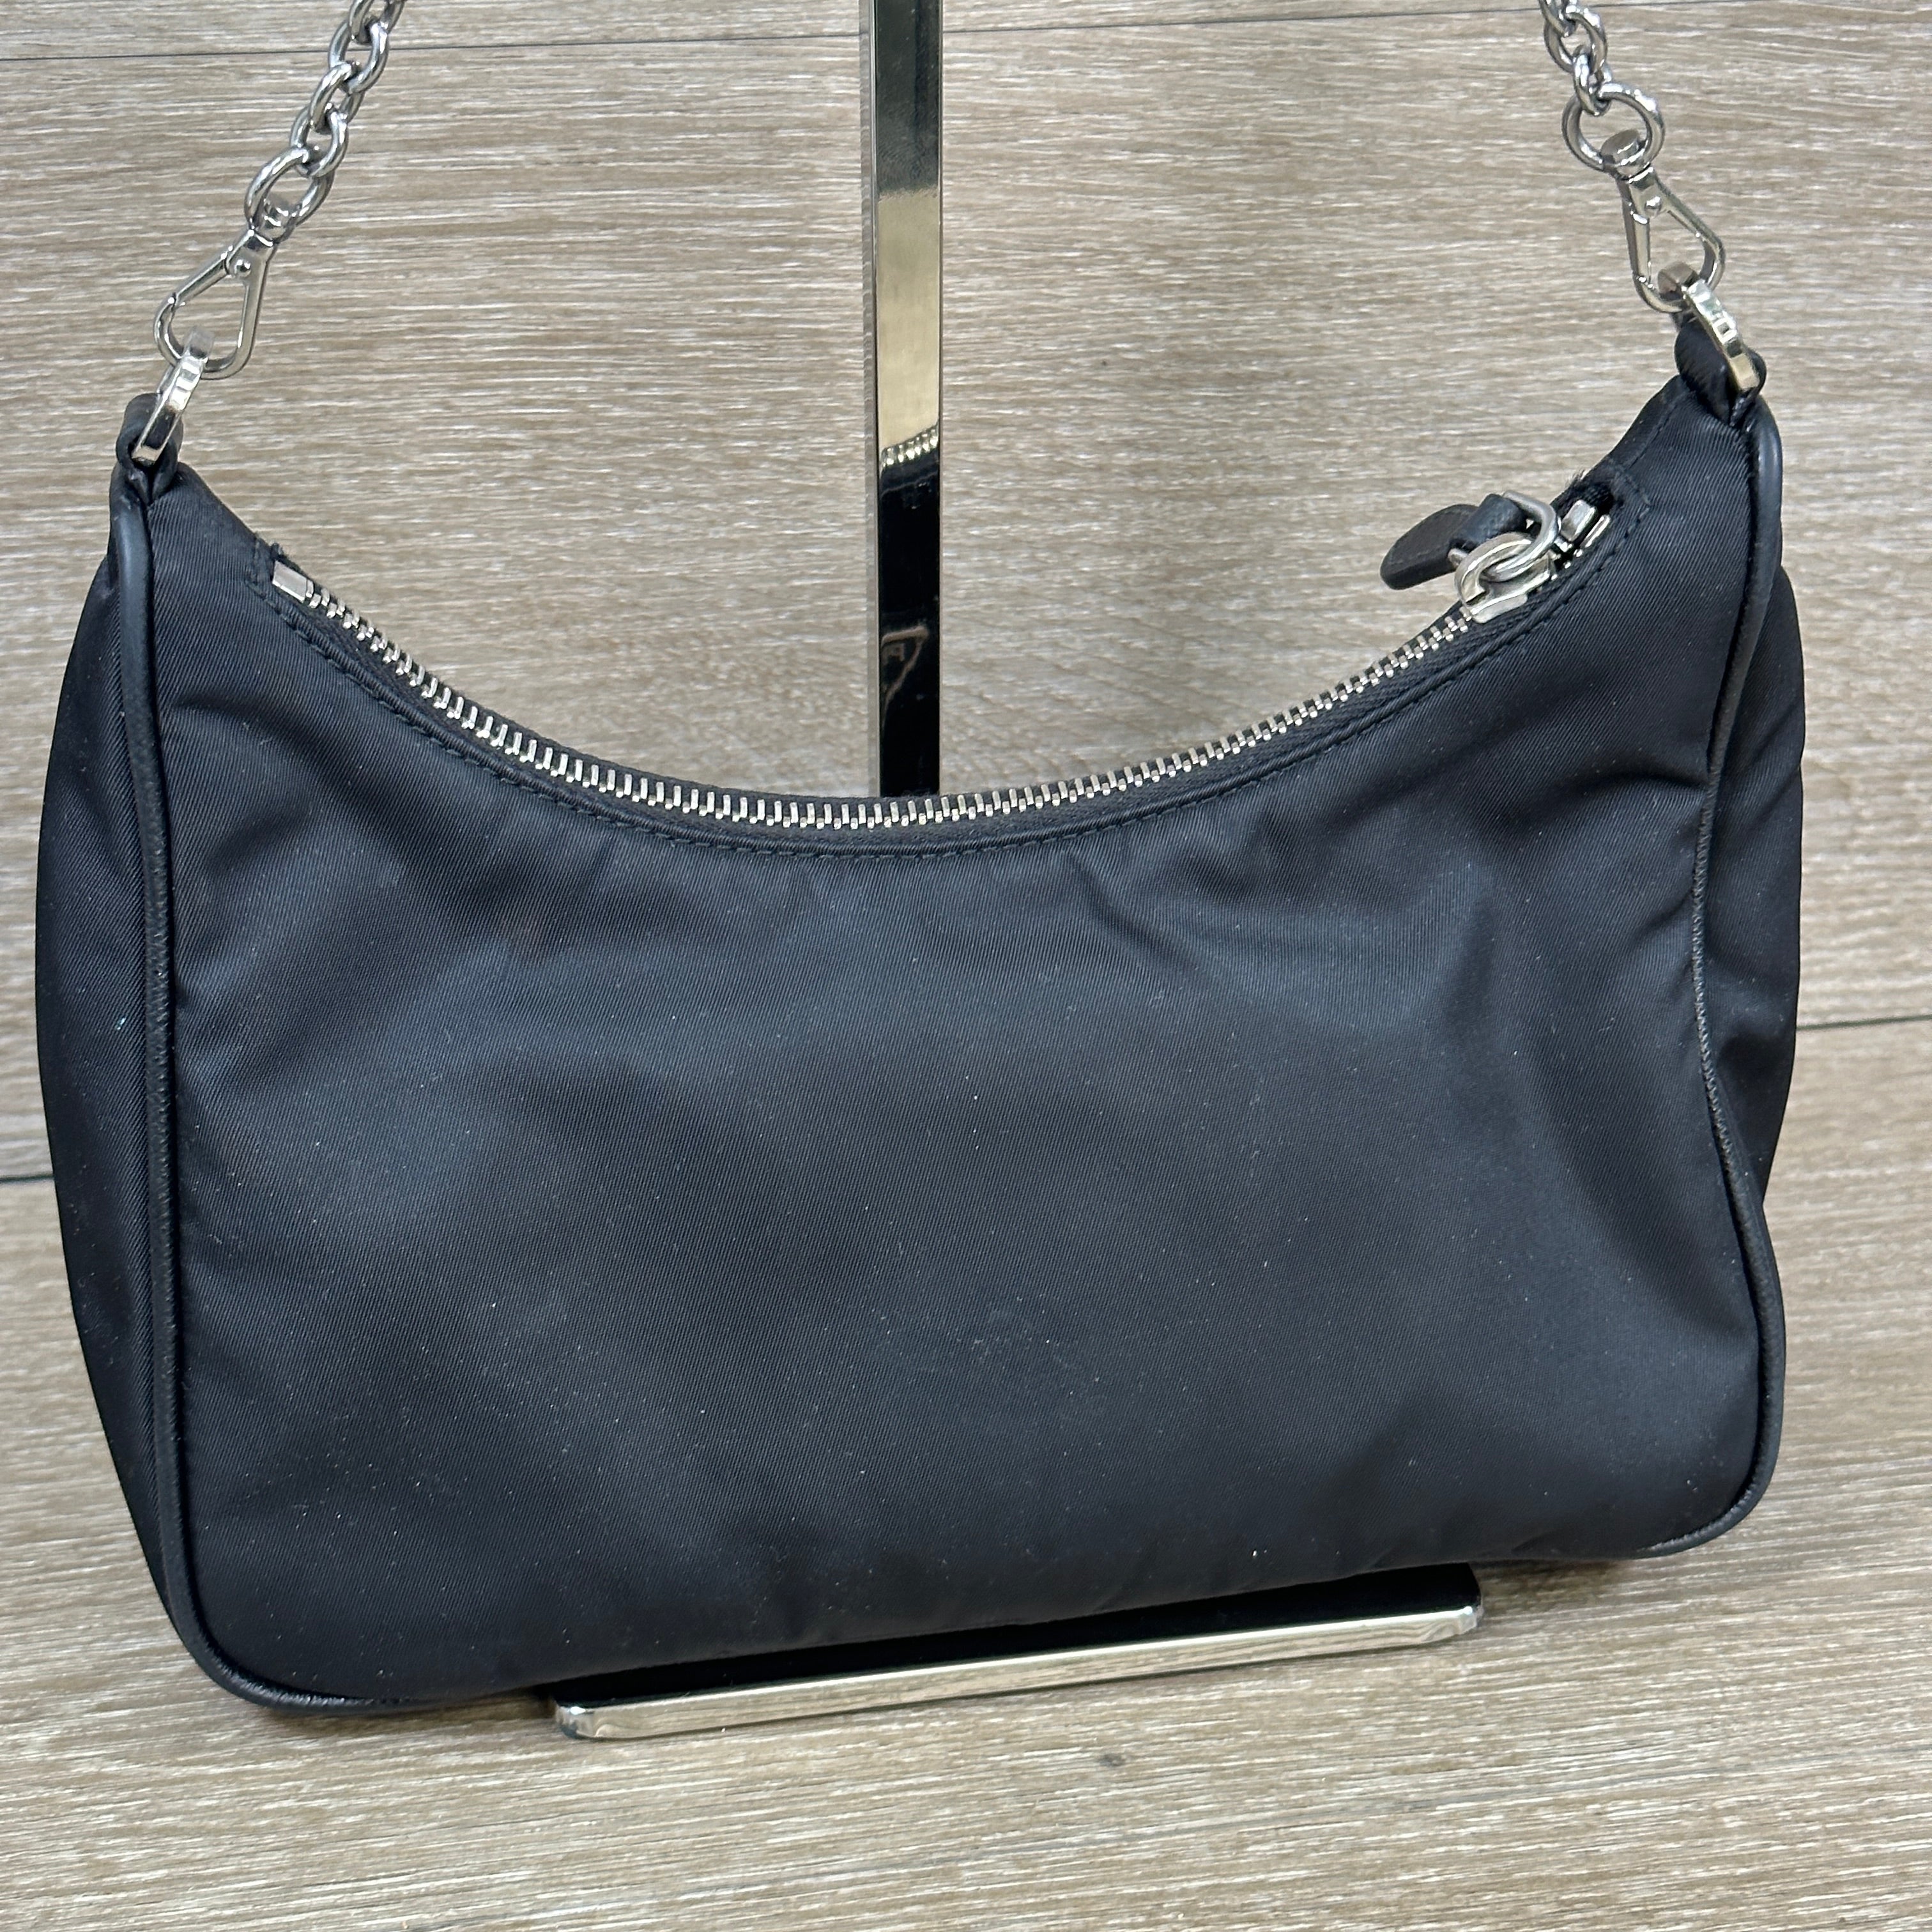 Black - Leather - Nylon - Bag - PRADA - Bag - womens prada